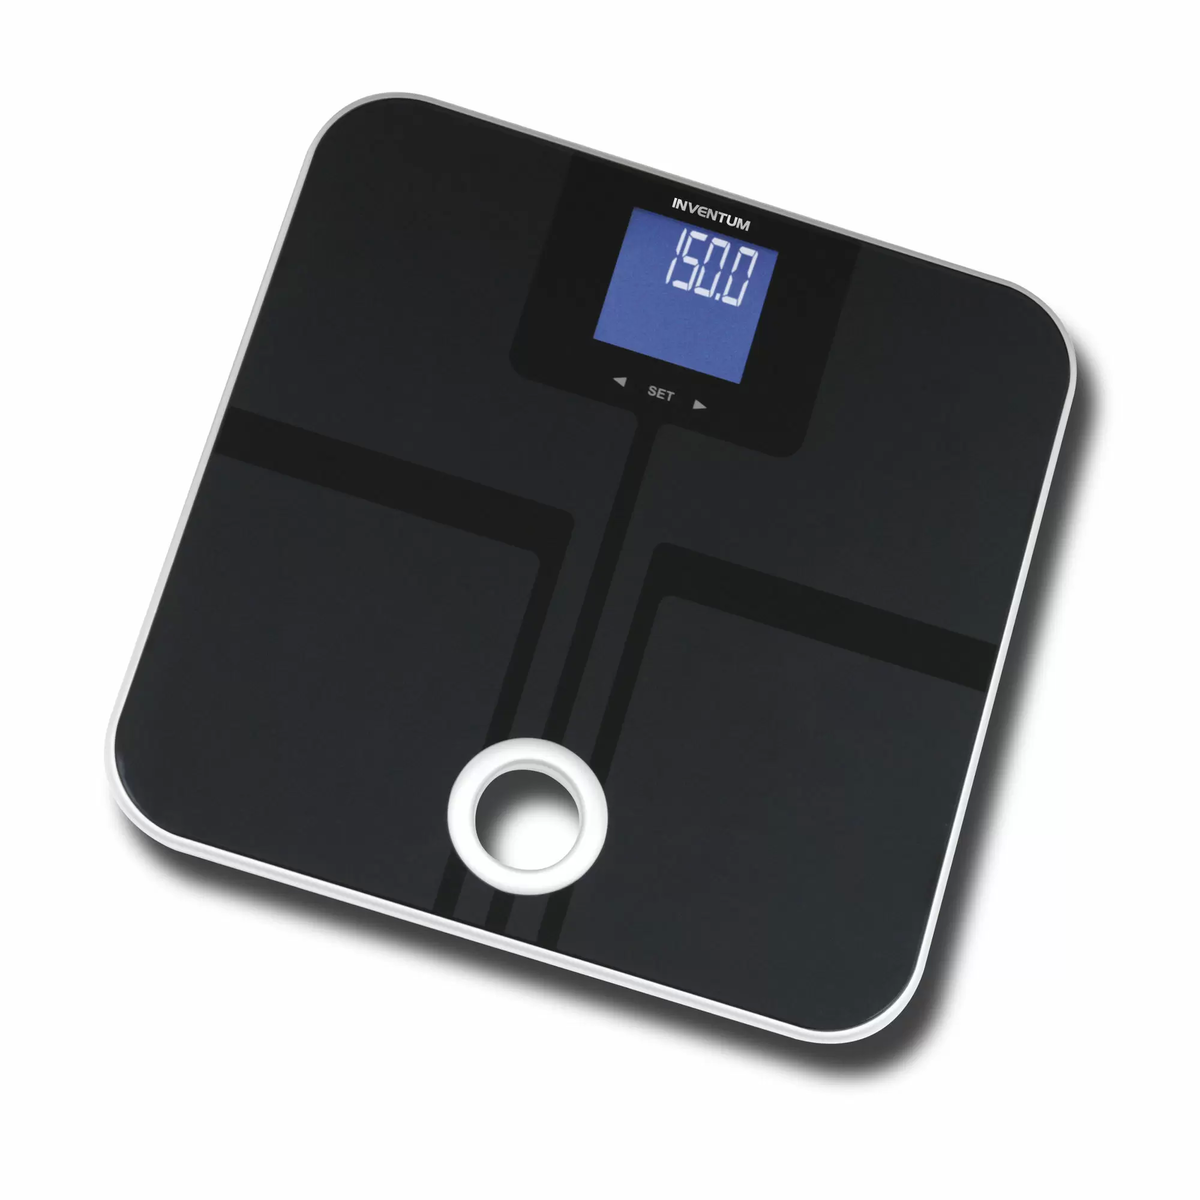 Inventum PW730BG tot 180 kg, glas,vet- vocht- en spiermassa, BMI meetsysteem